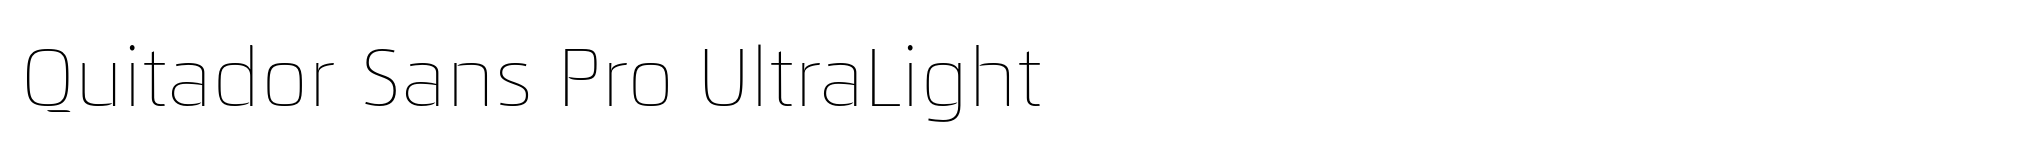 Quitador Sans Pro UltraLight image